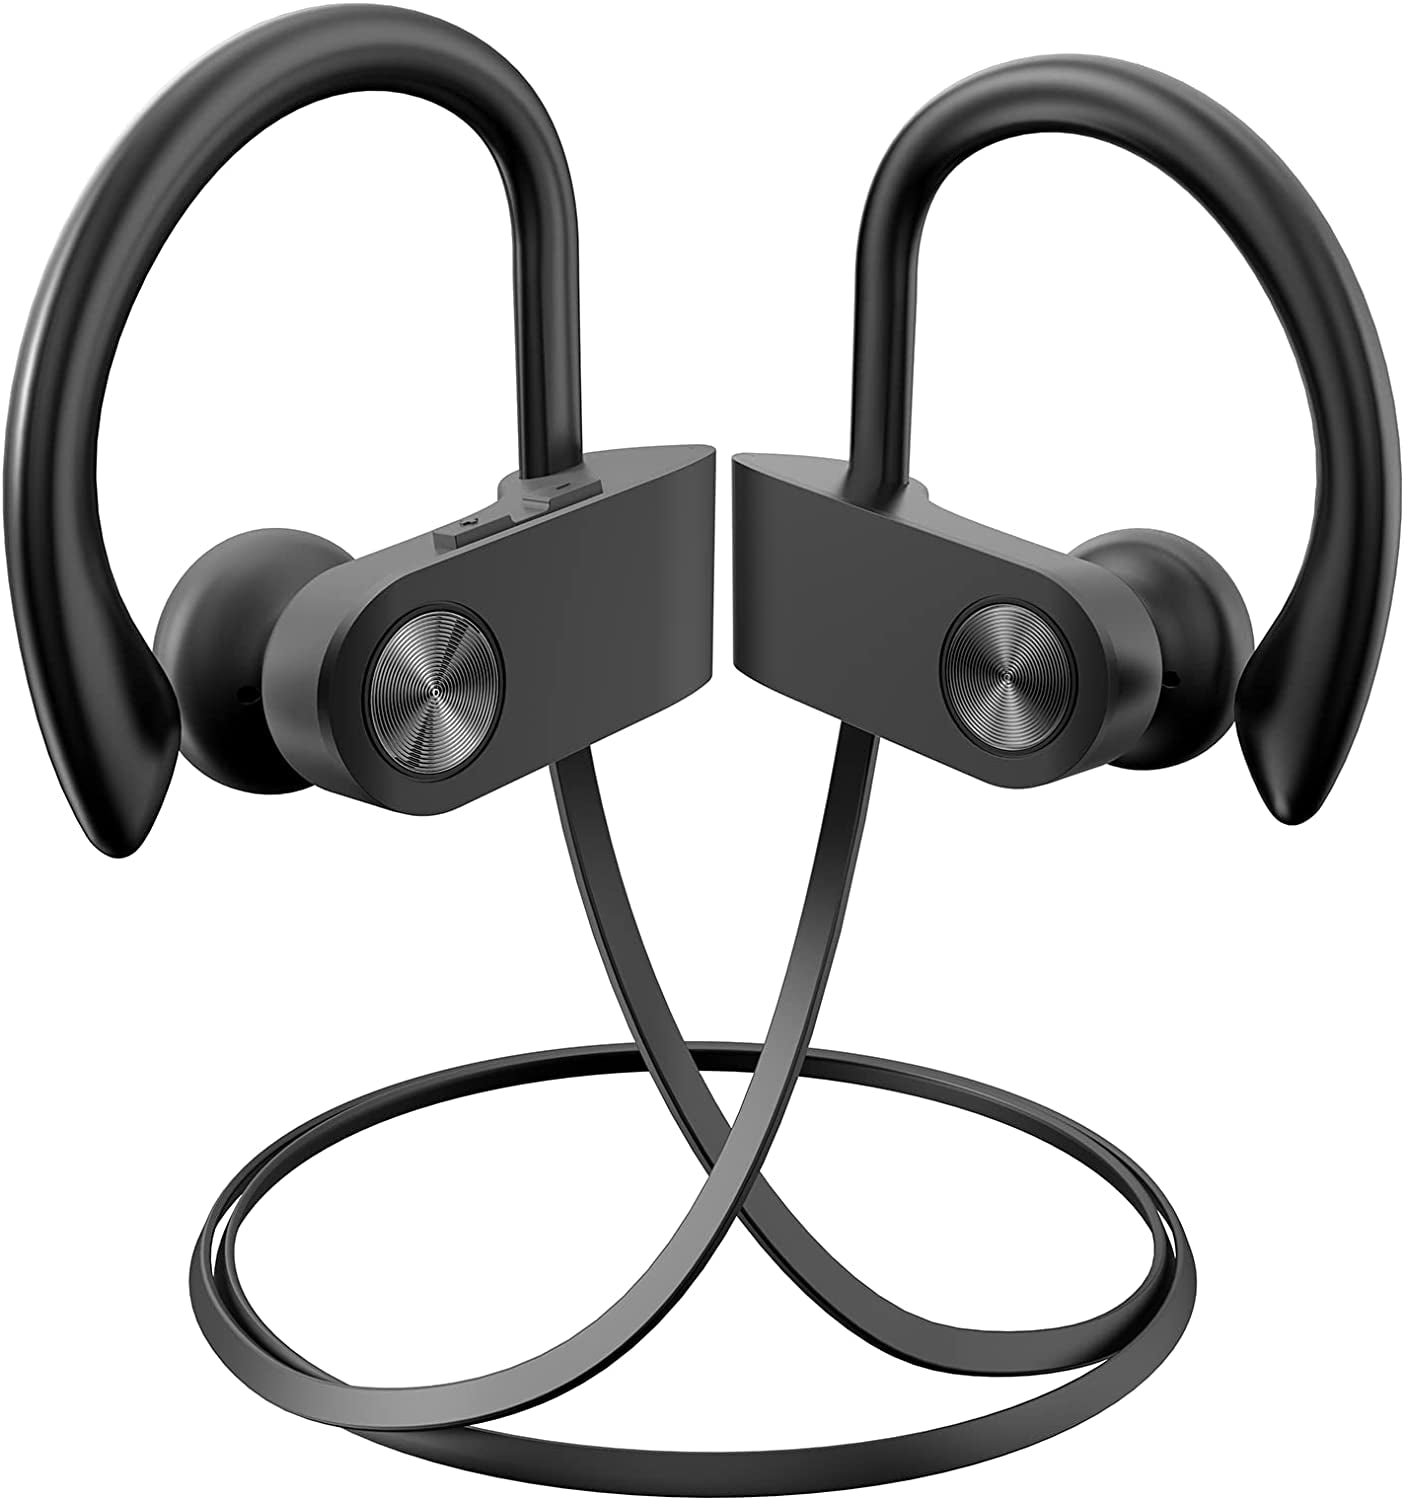 Lfutari Bluetooth Headphones, IPX7 Waterproof Wireless Sports Earbuds, up to 12 Hours Playtime, Hifi Bass Stereo Earphones with Mic, Sweatproof Headphones for Running